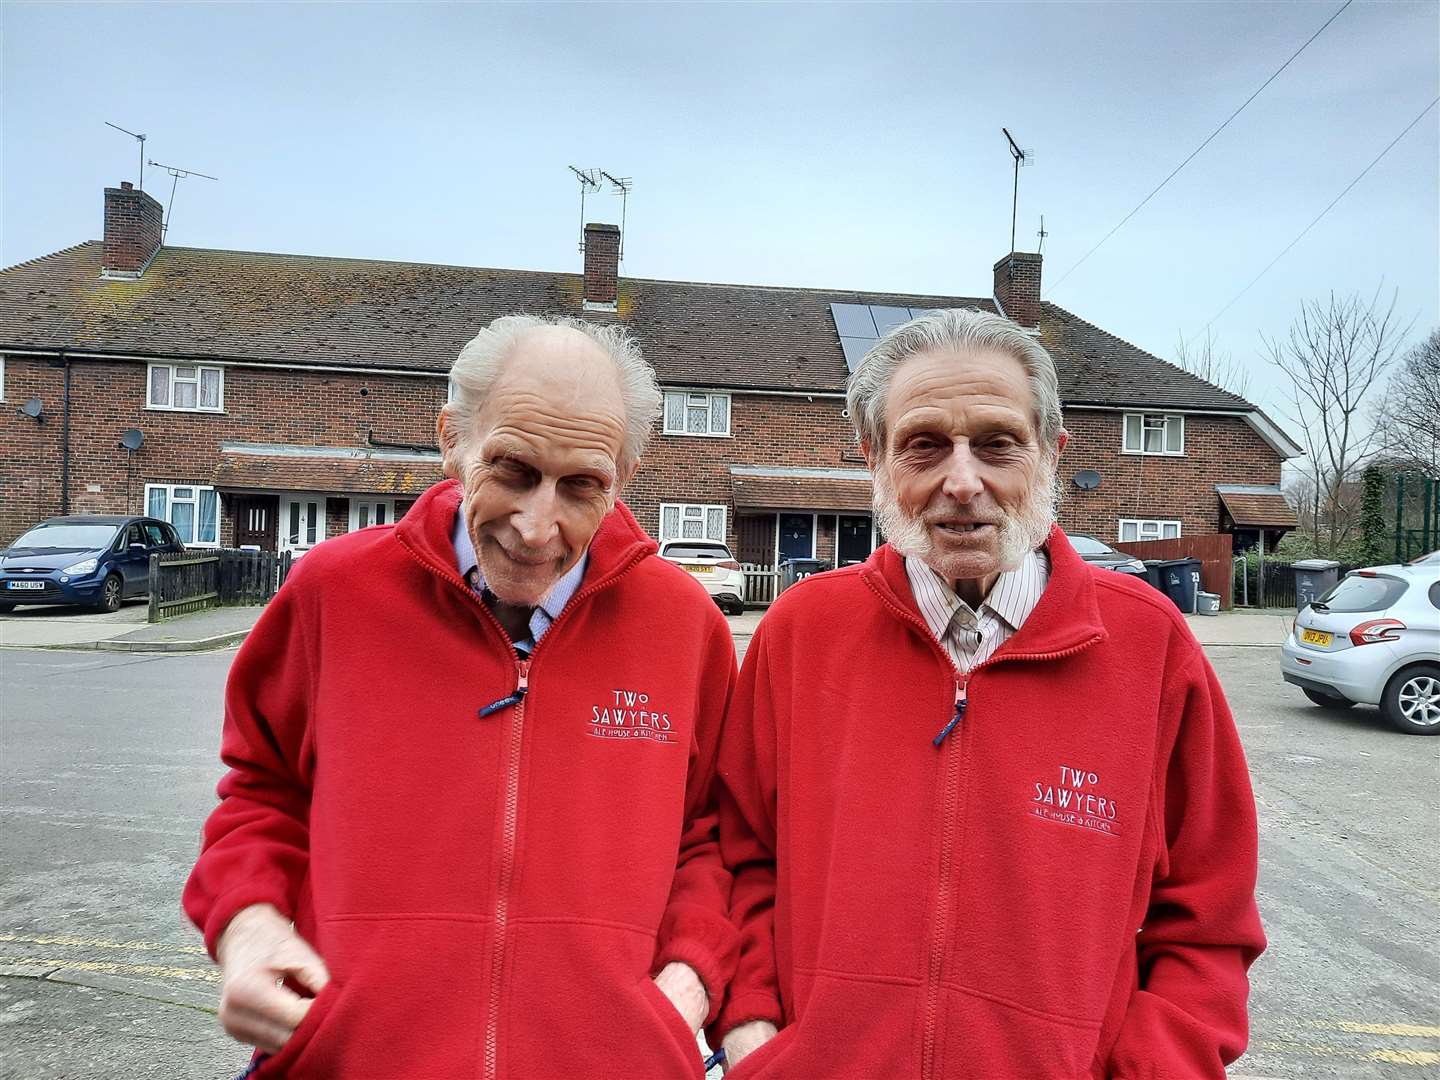 Tony, left, and Bob stood in Edgar Road, Canterbury